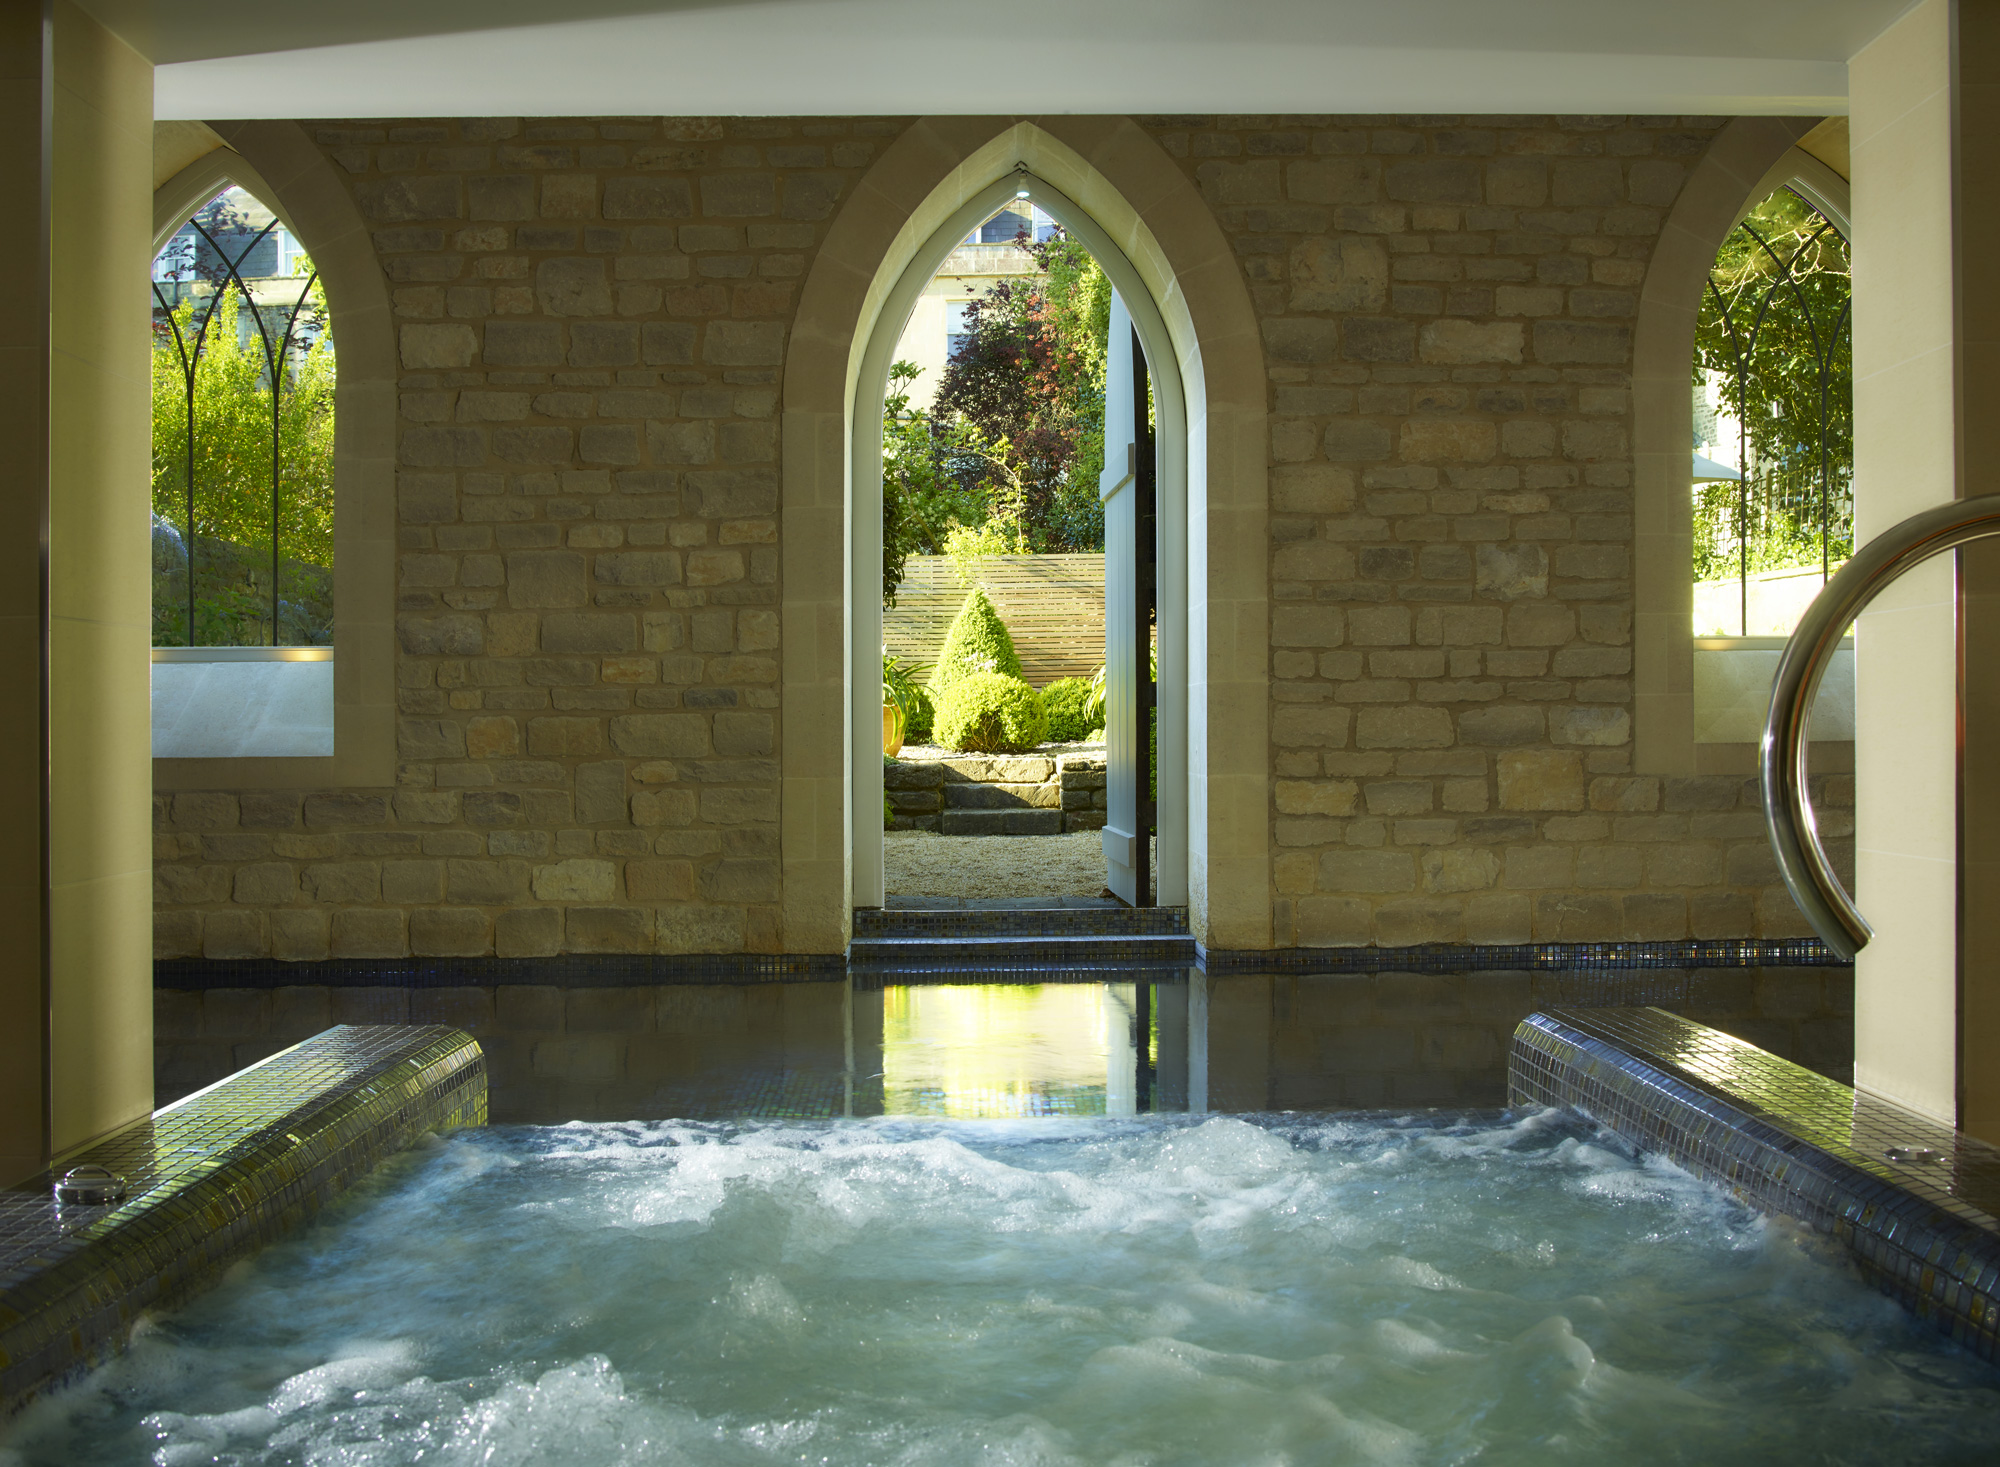 royal crescent hotel & spa in bath england